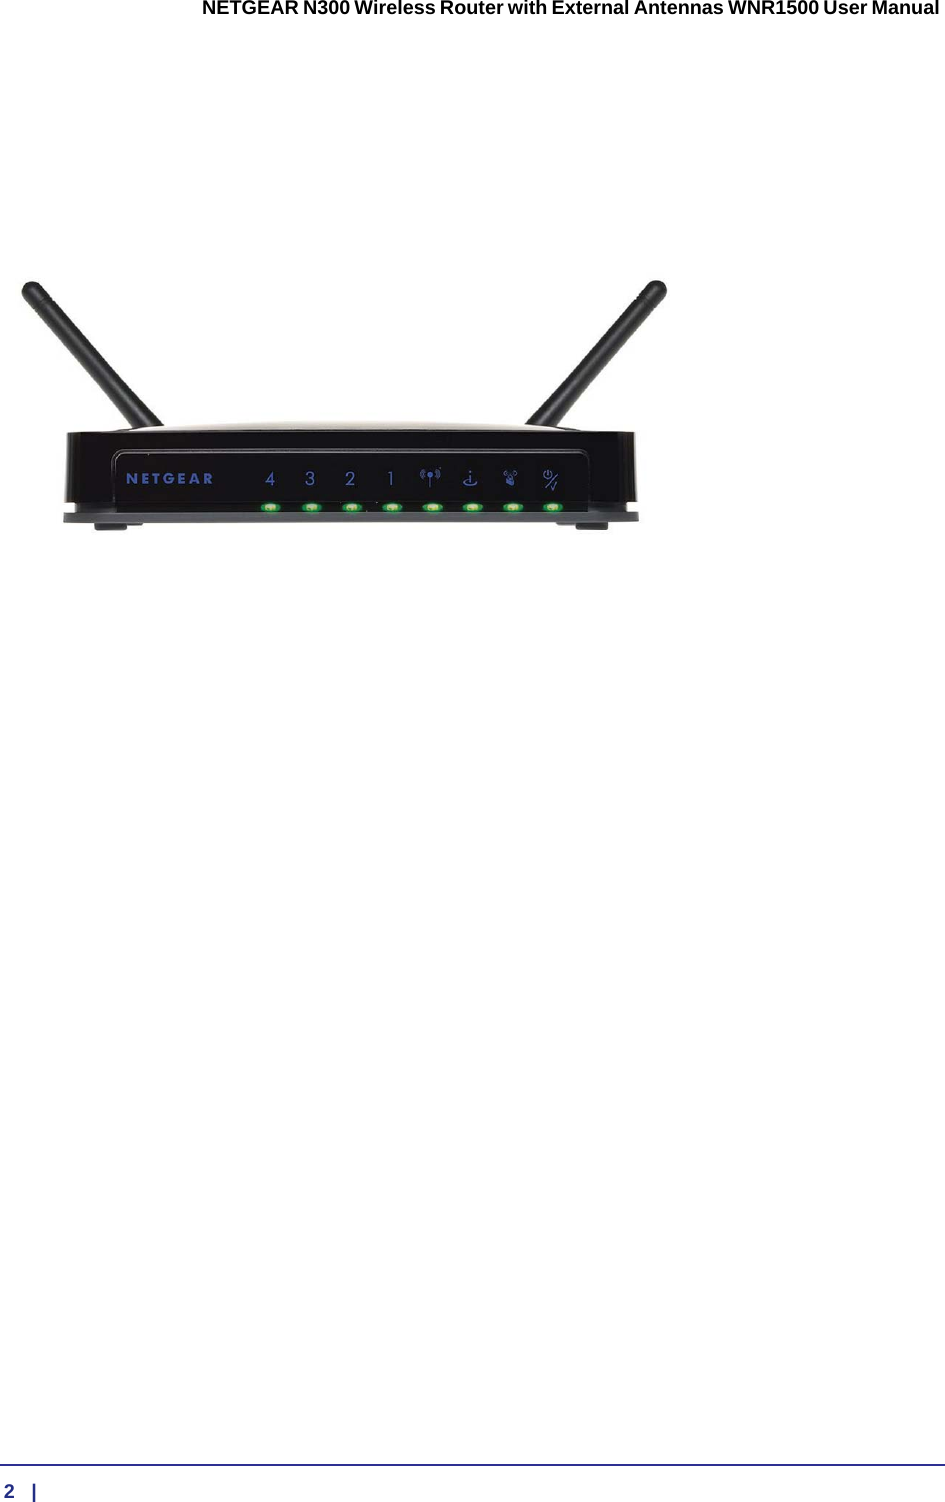  2   |      NETGEAR N300 Wireless Router with External Antennas WNR1500 User Manual 